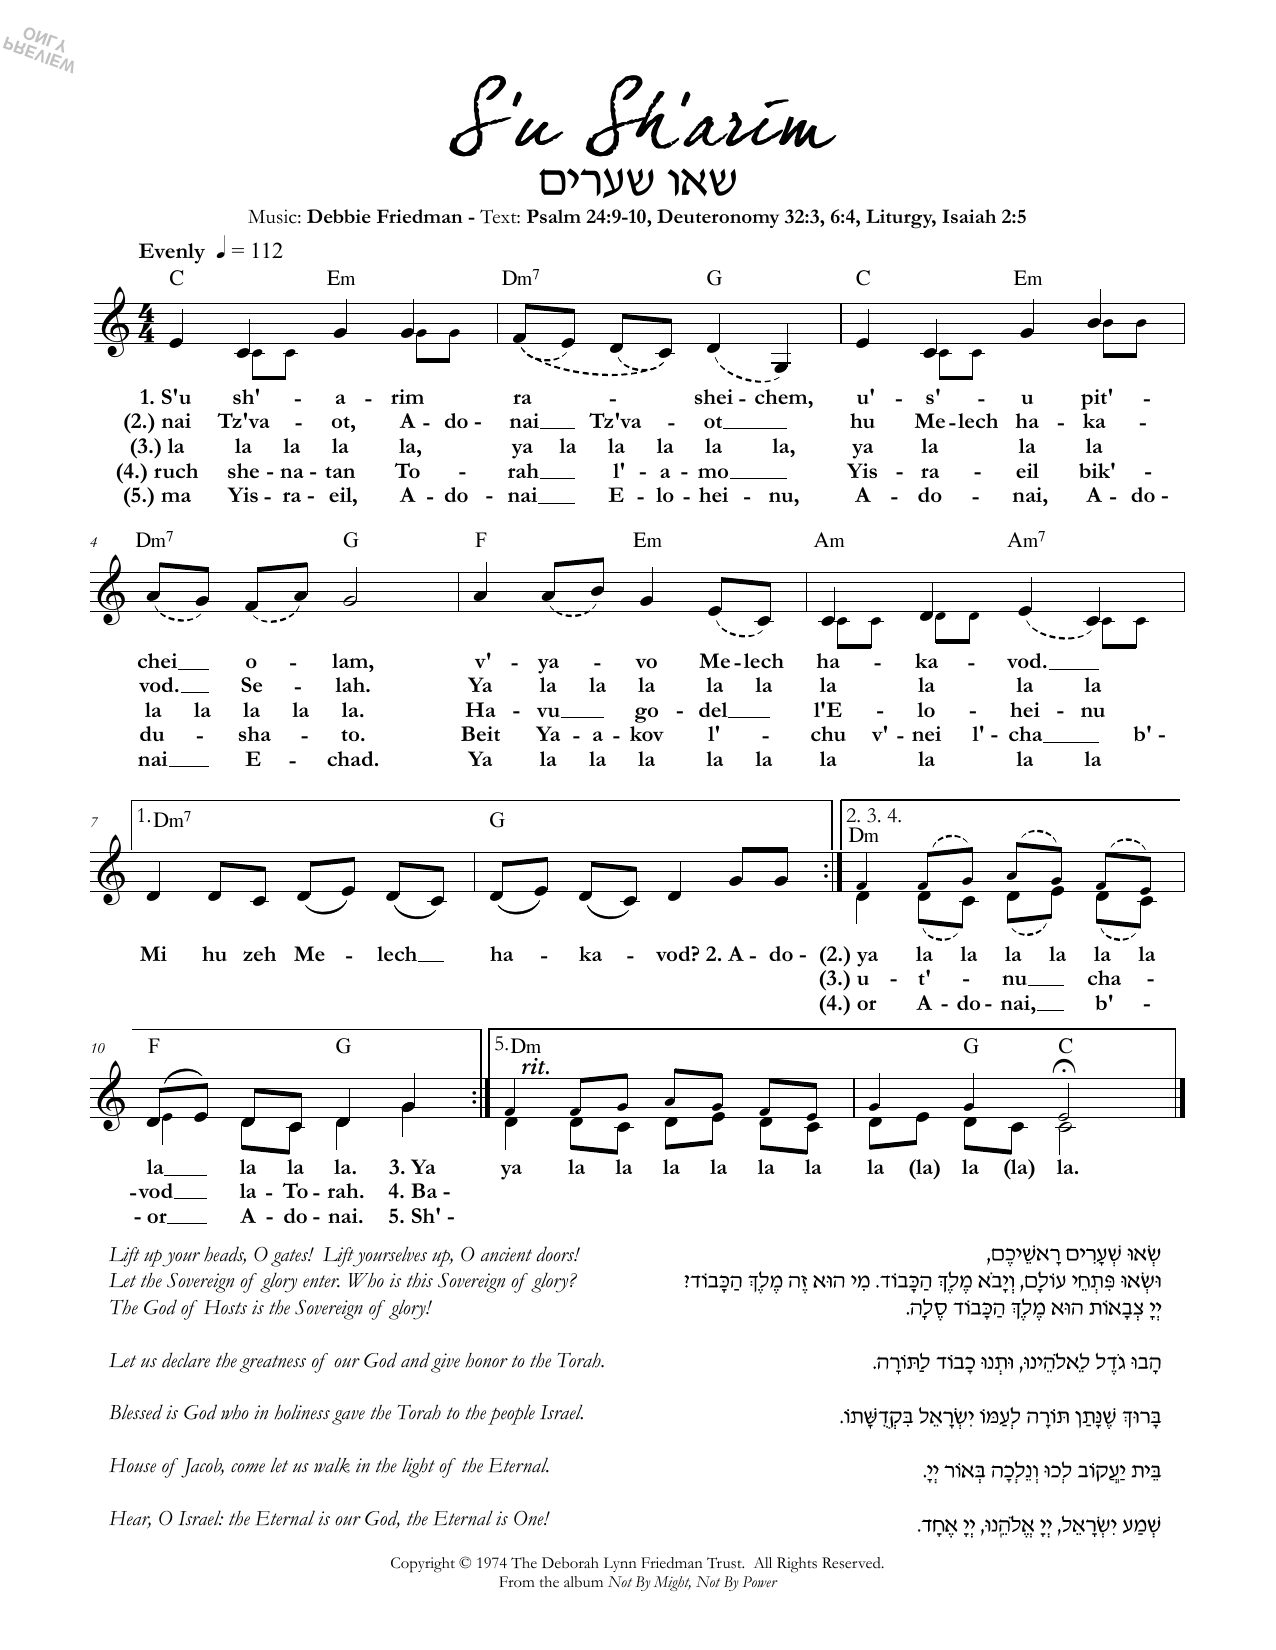 Download Debbie Friedman S'u Sh'arim Sheet Music and learn how to play Lead Sheet / Fake Book PDF digital score in minutes